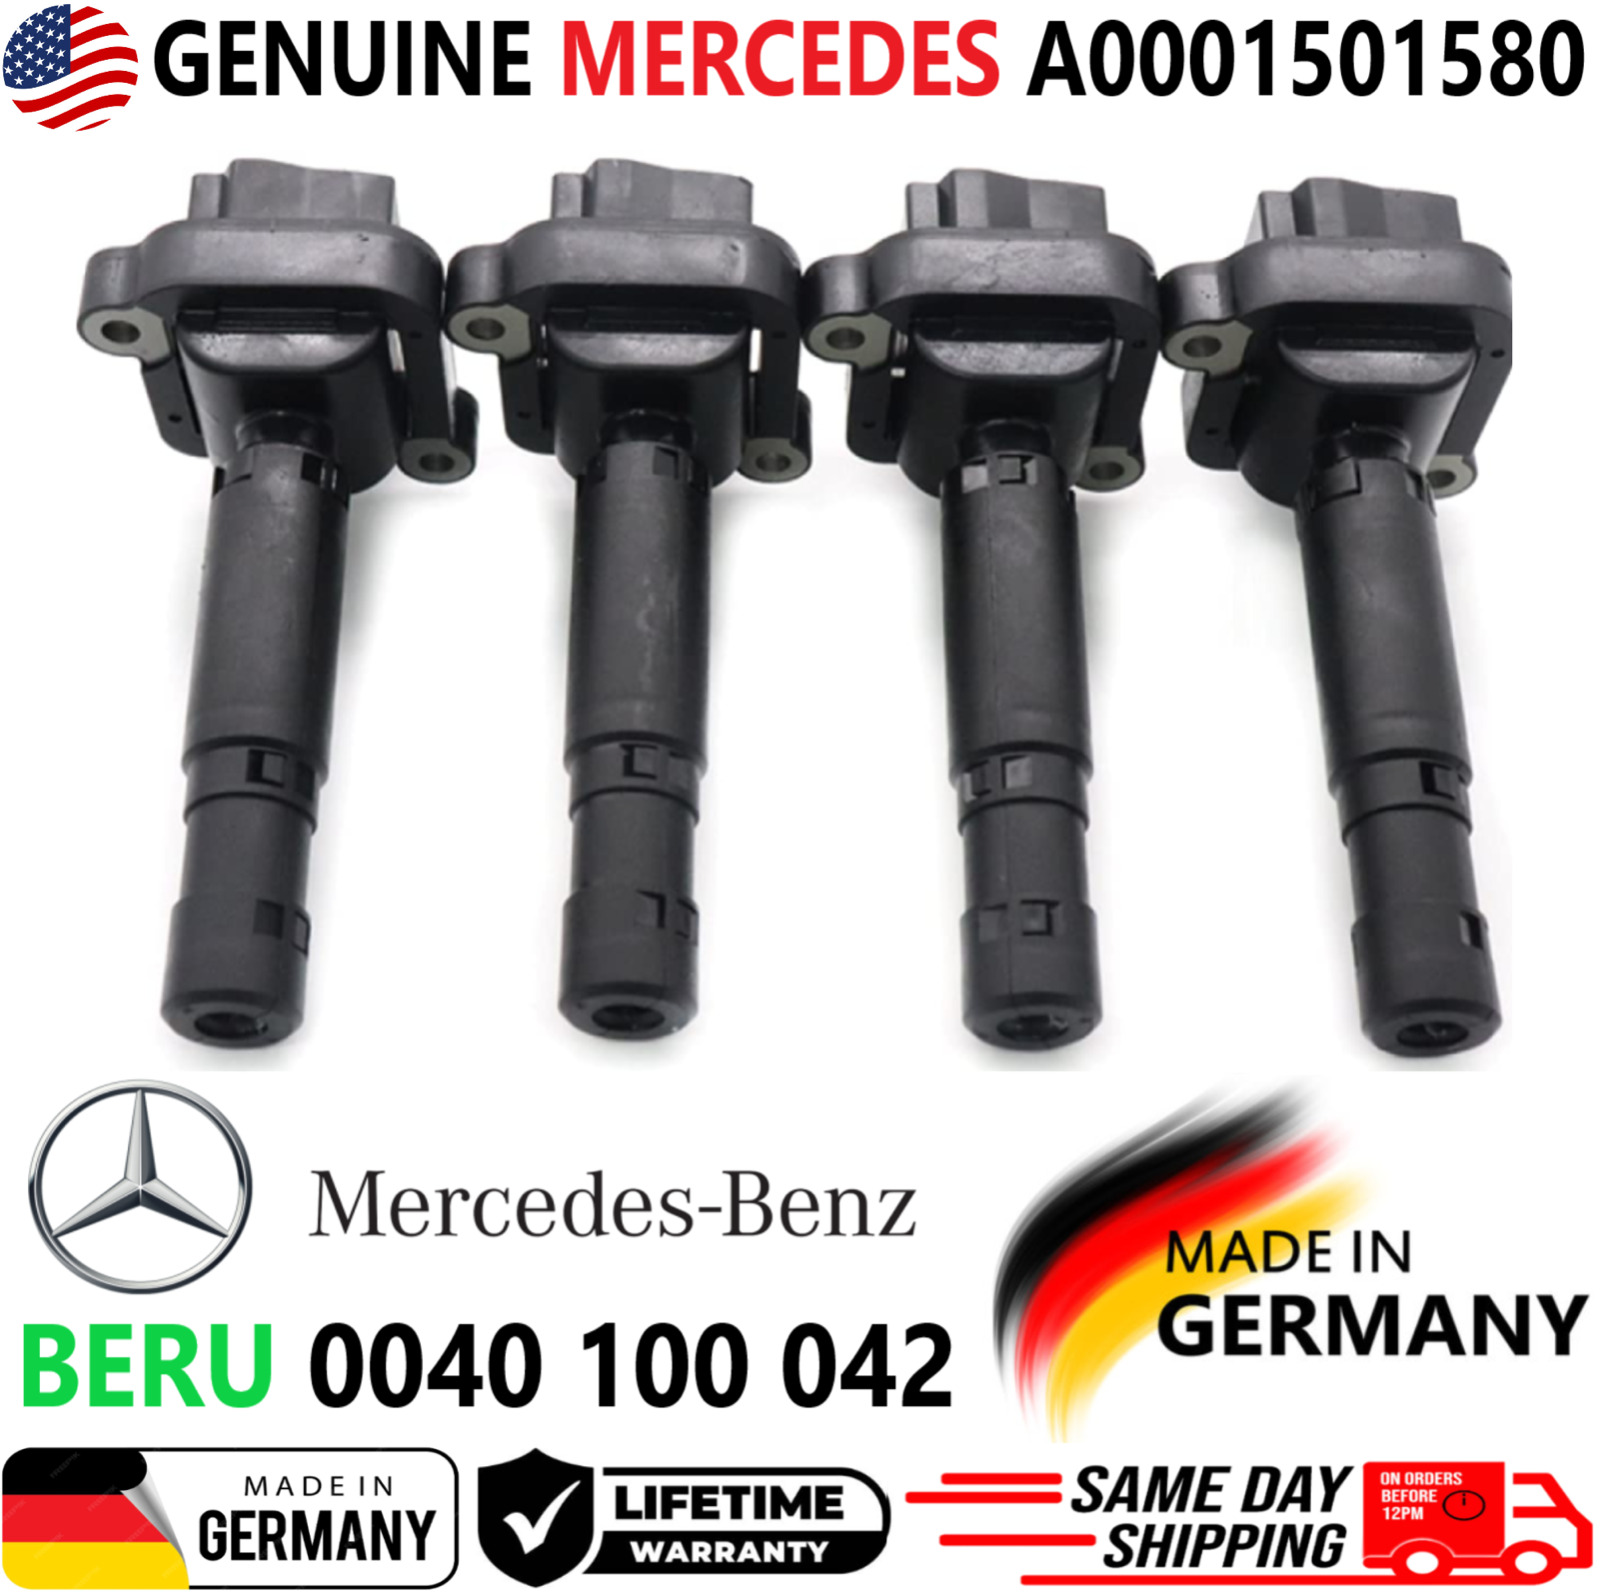 GENUINE Mercedes-Benz x4 Ignition Coils For 2003-2005 Mercedes-Benz C230 1.8L I4